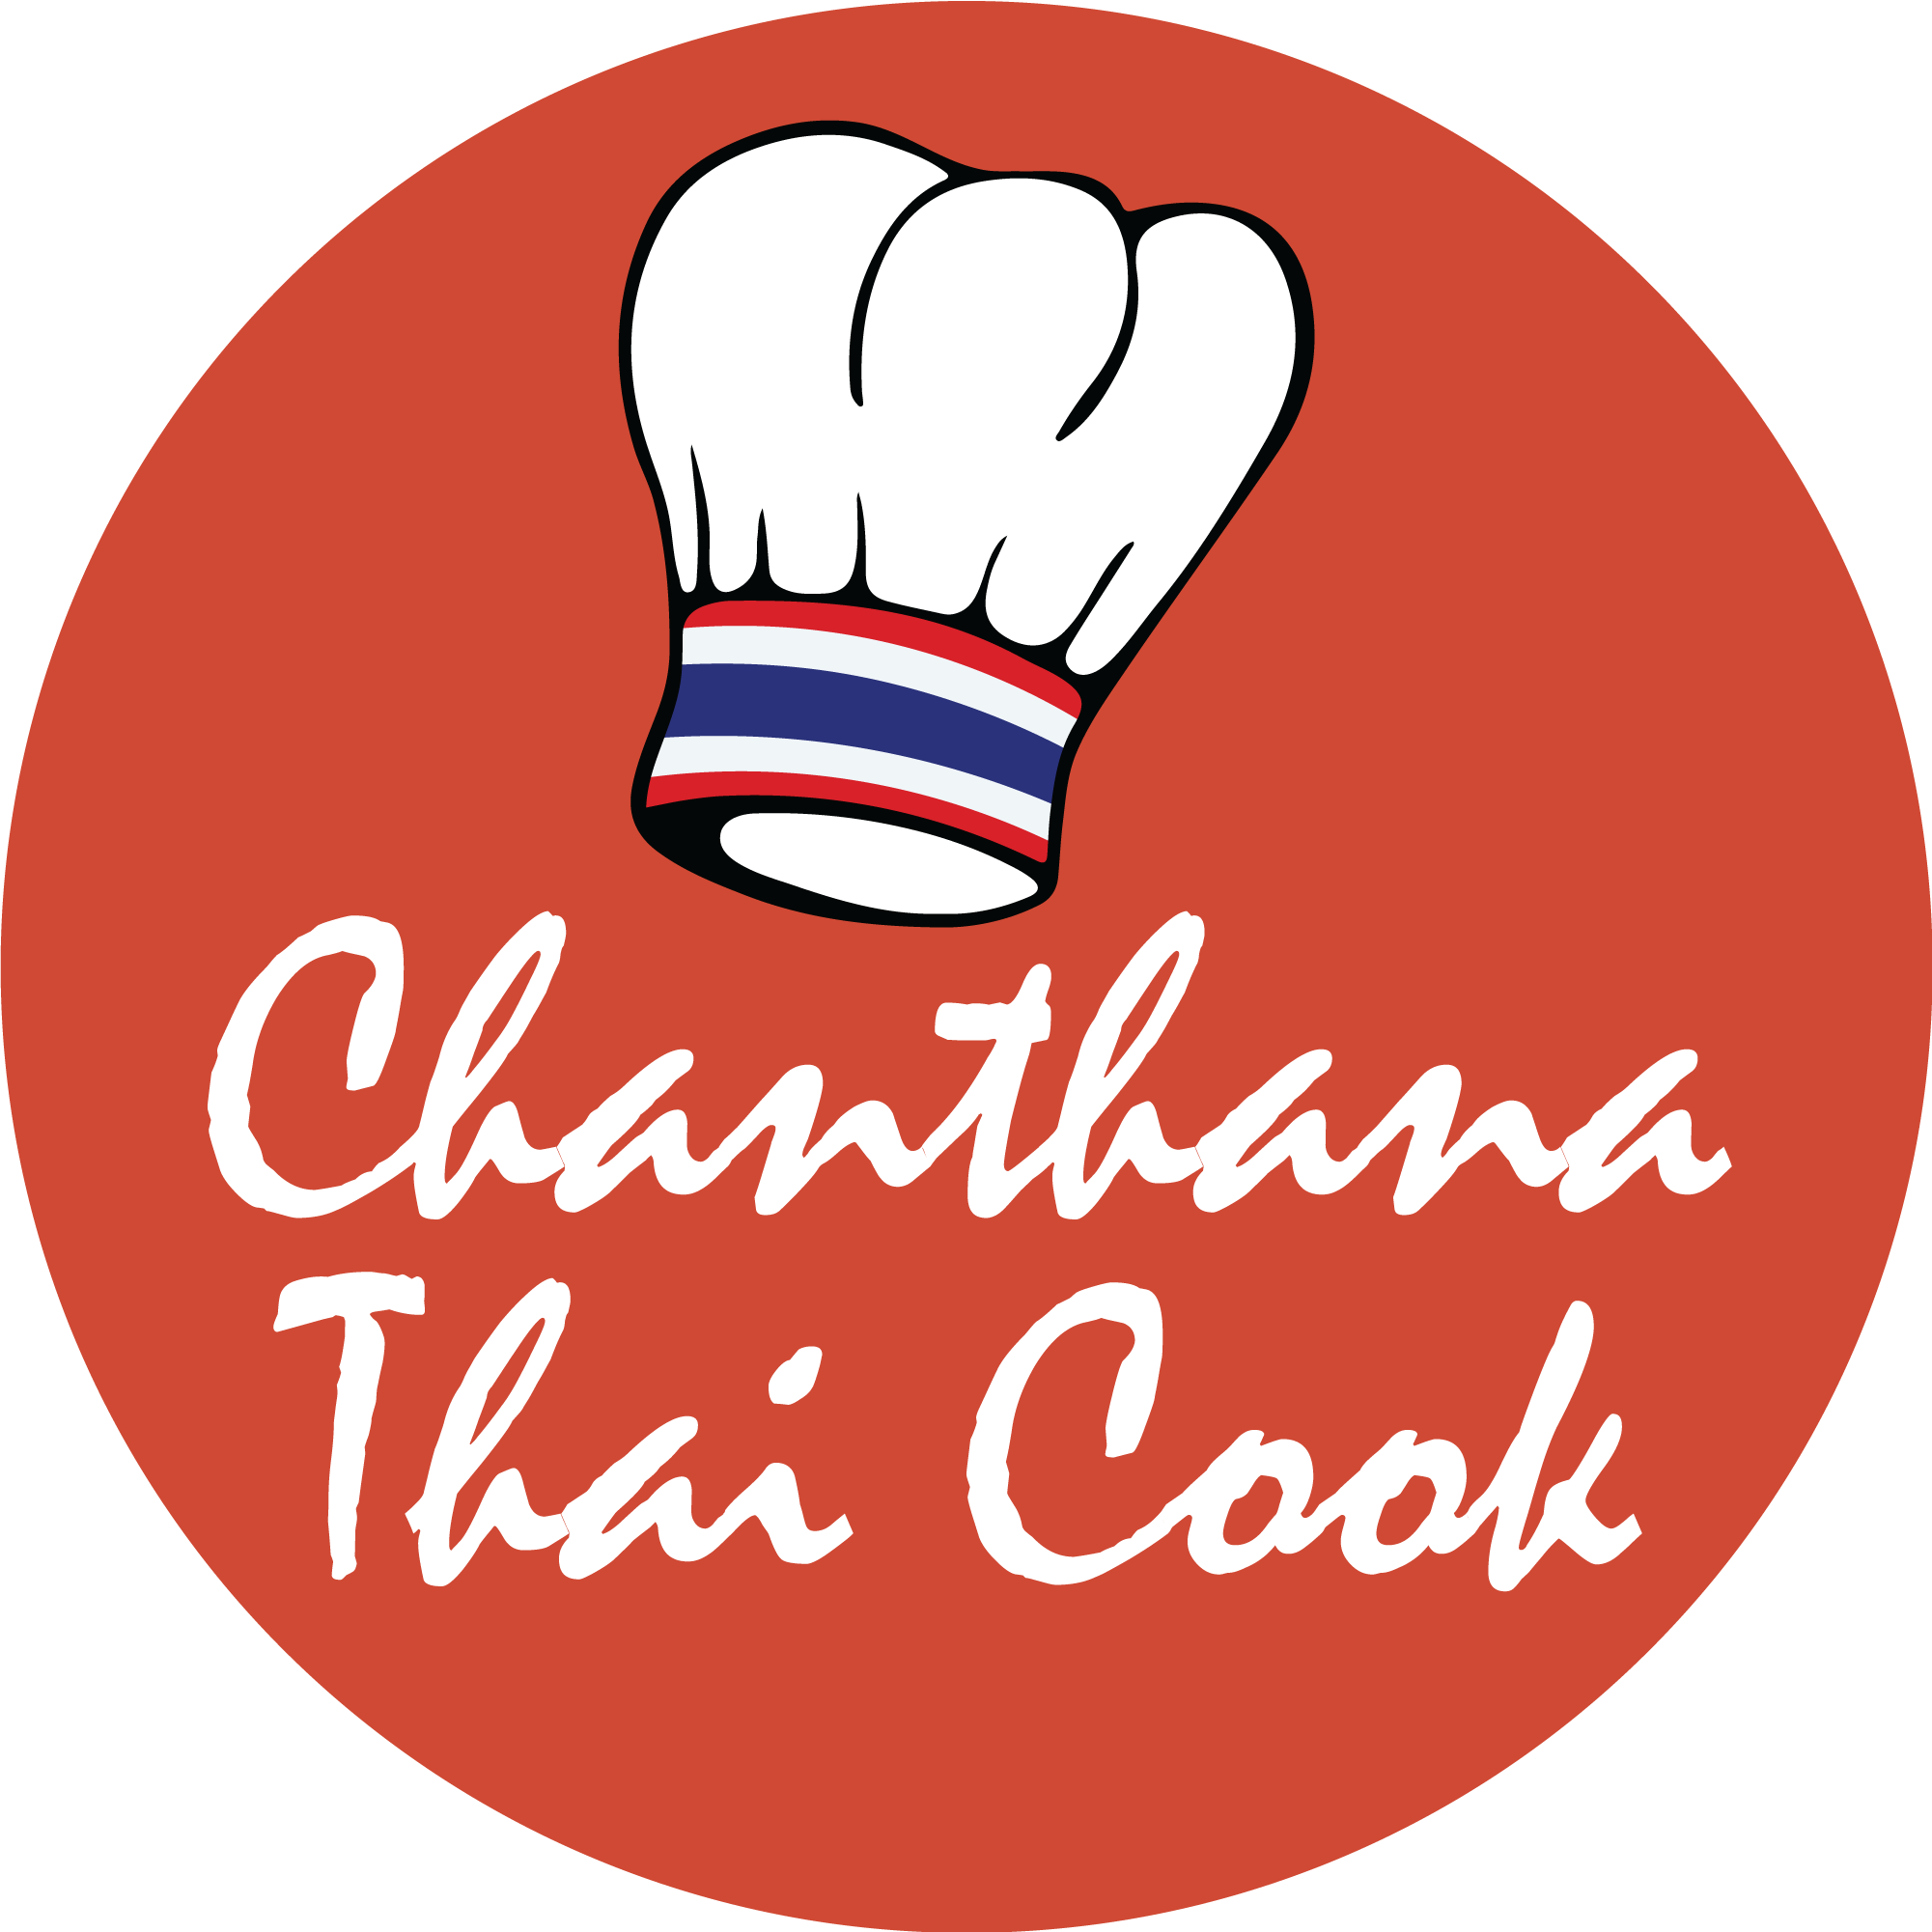 Chanthana Thai Cook